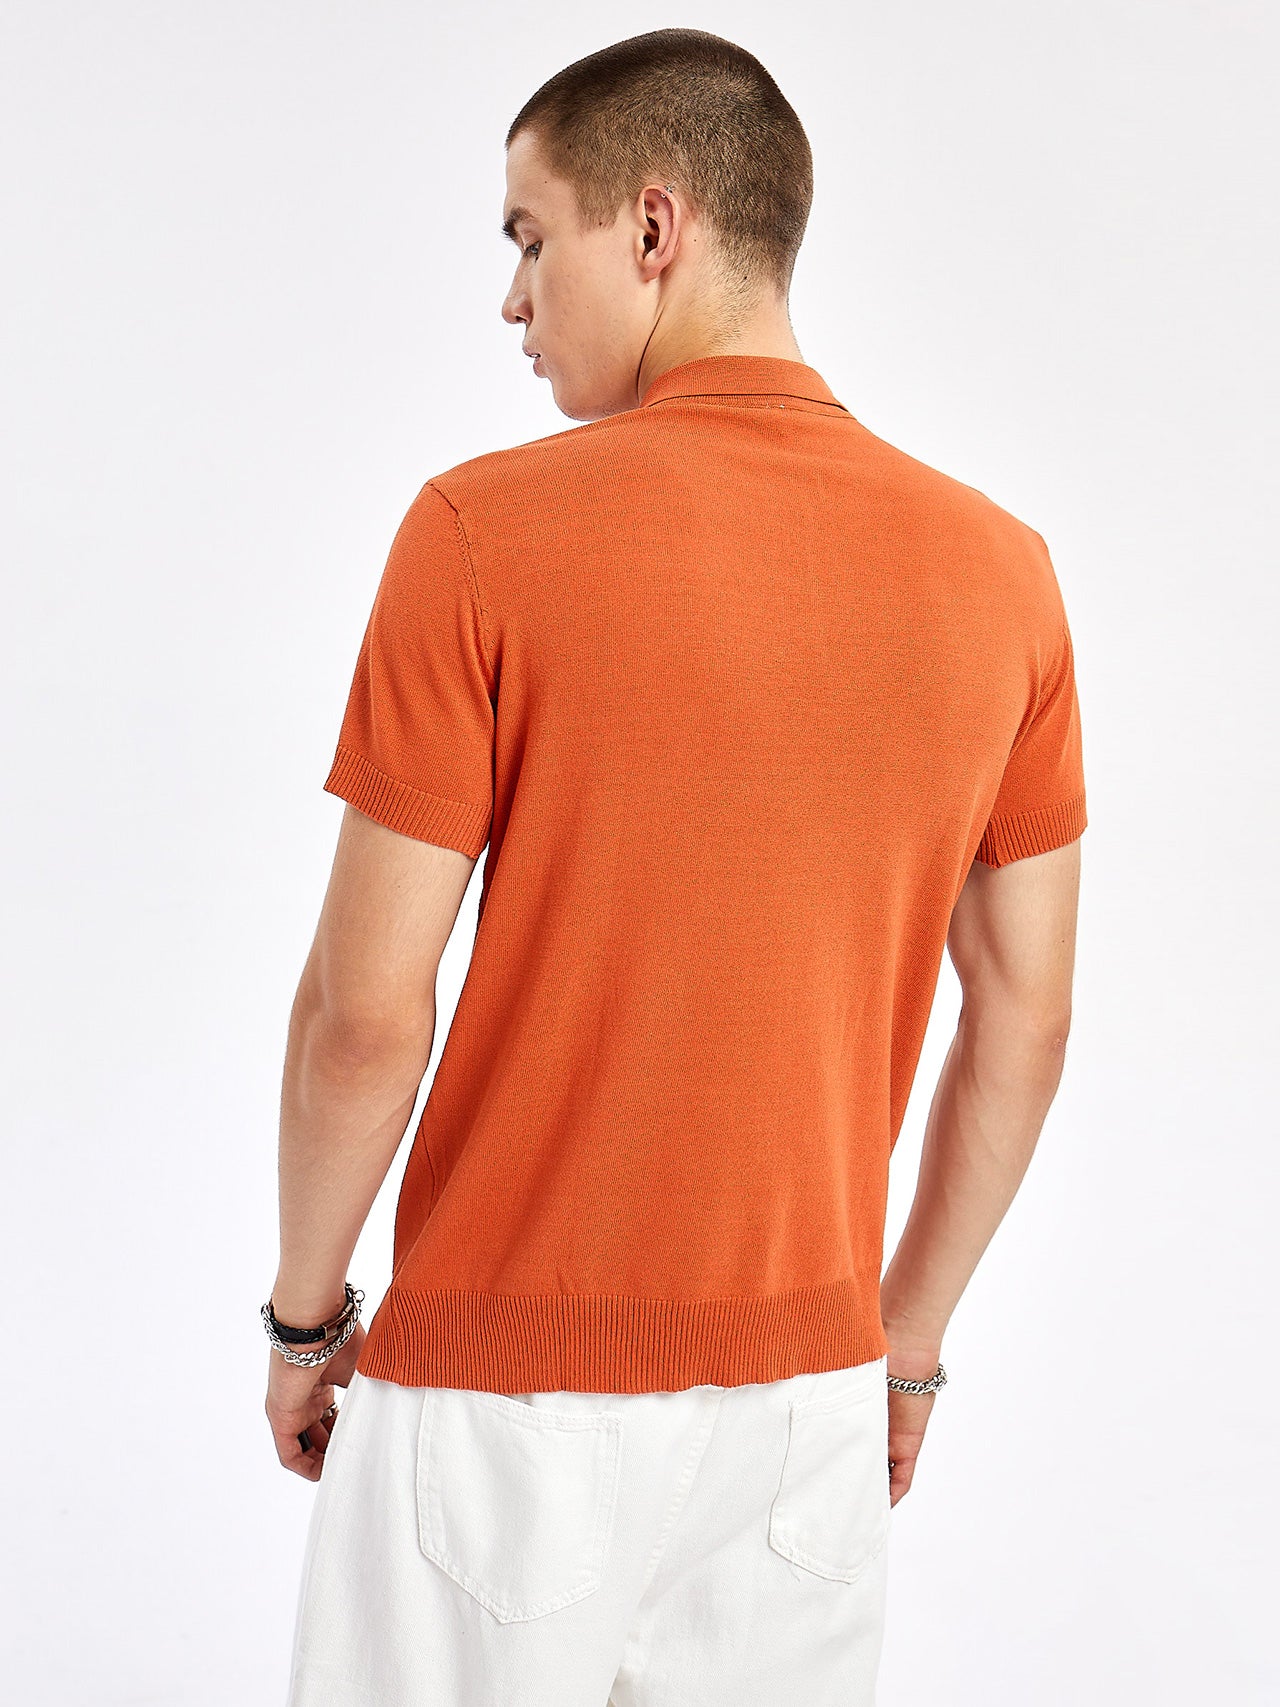 Plain Viscose Orange Polo Tops for men's